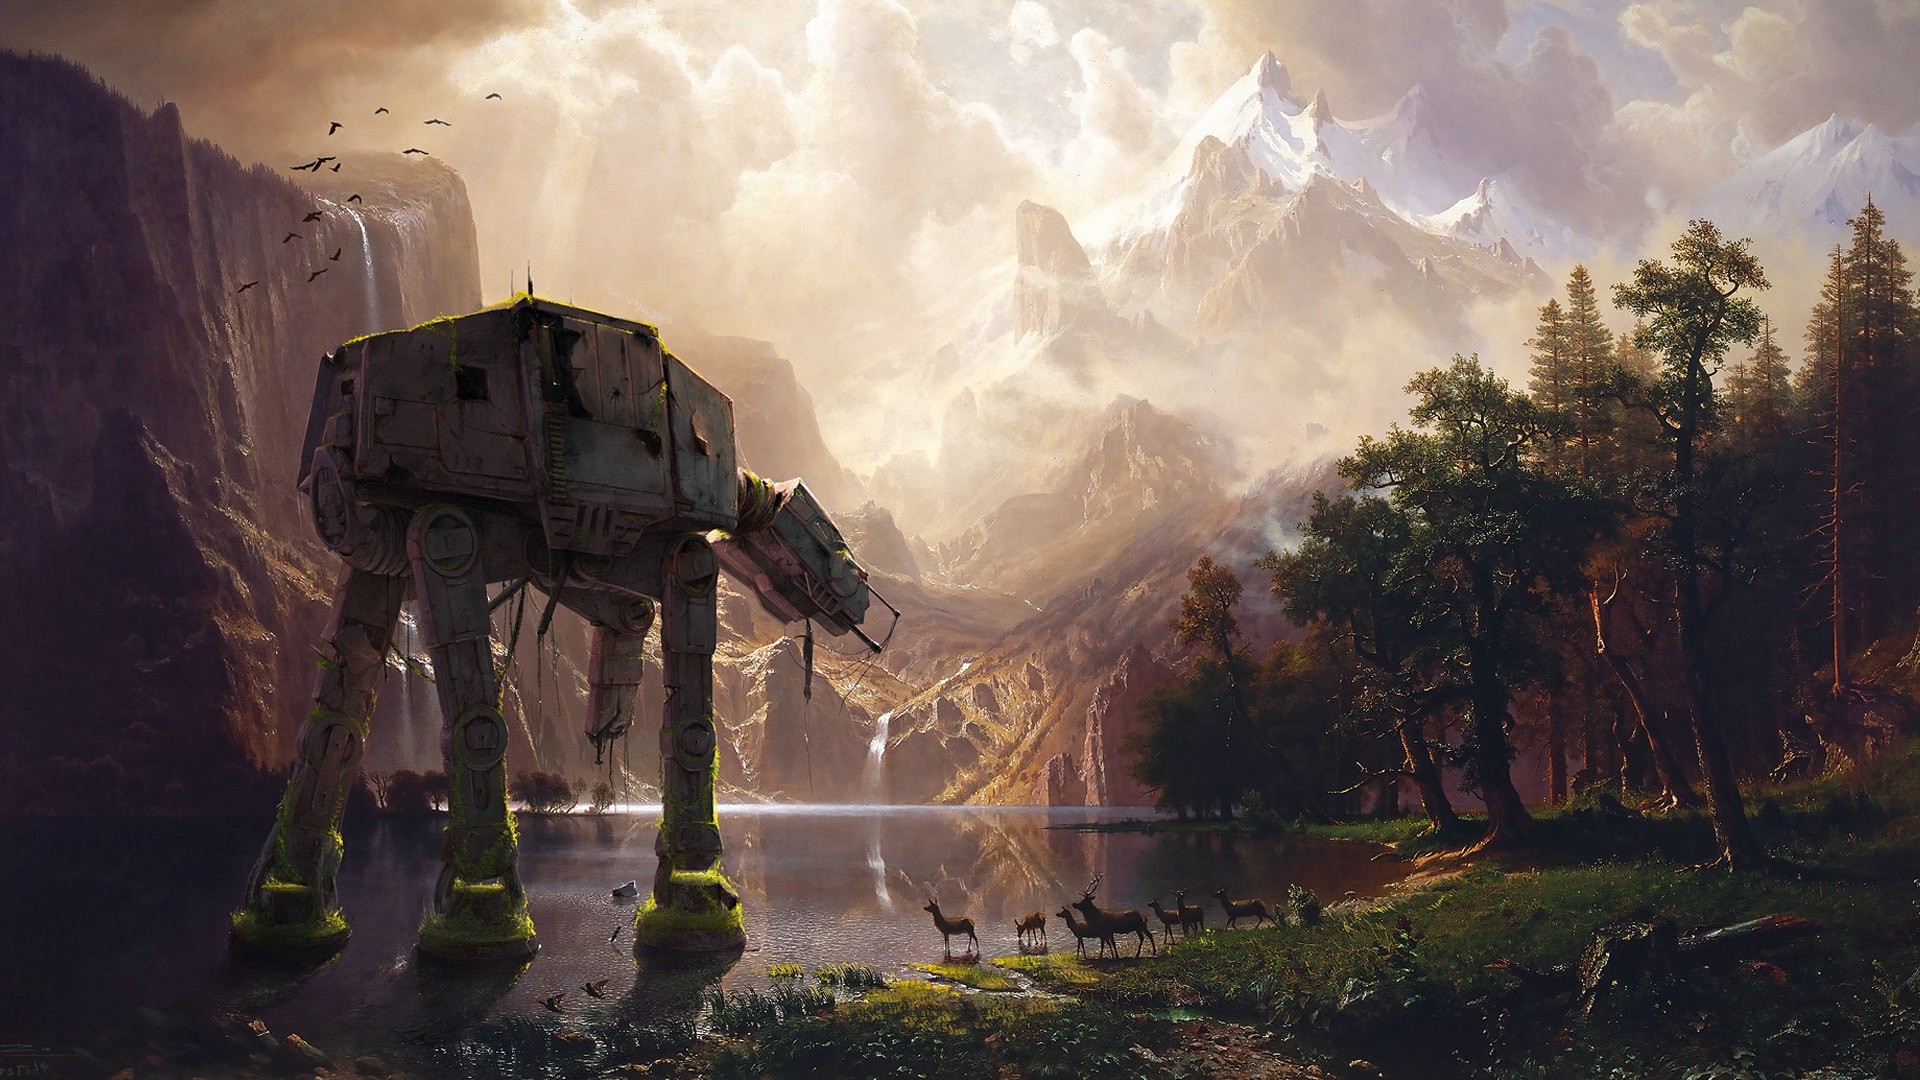 Star wars giant robot concept art